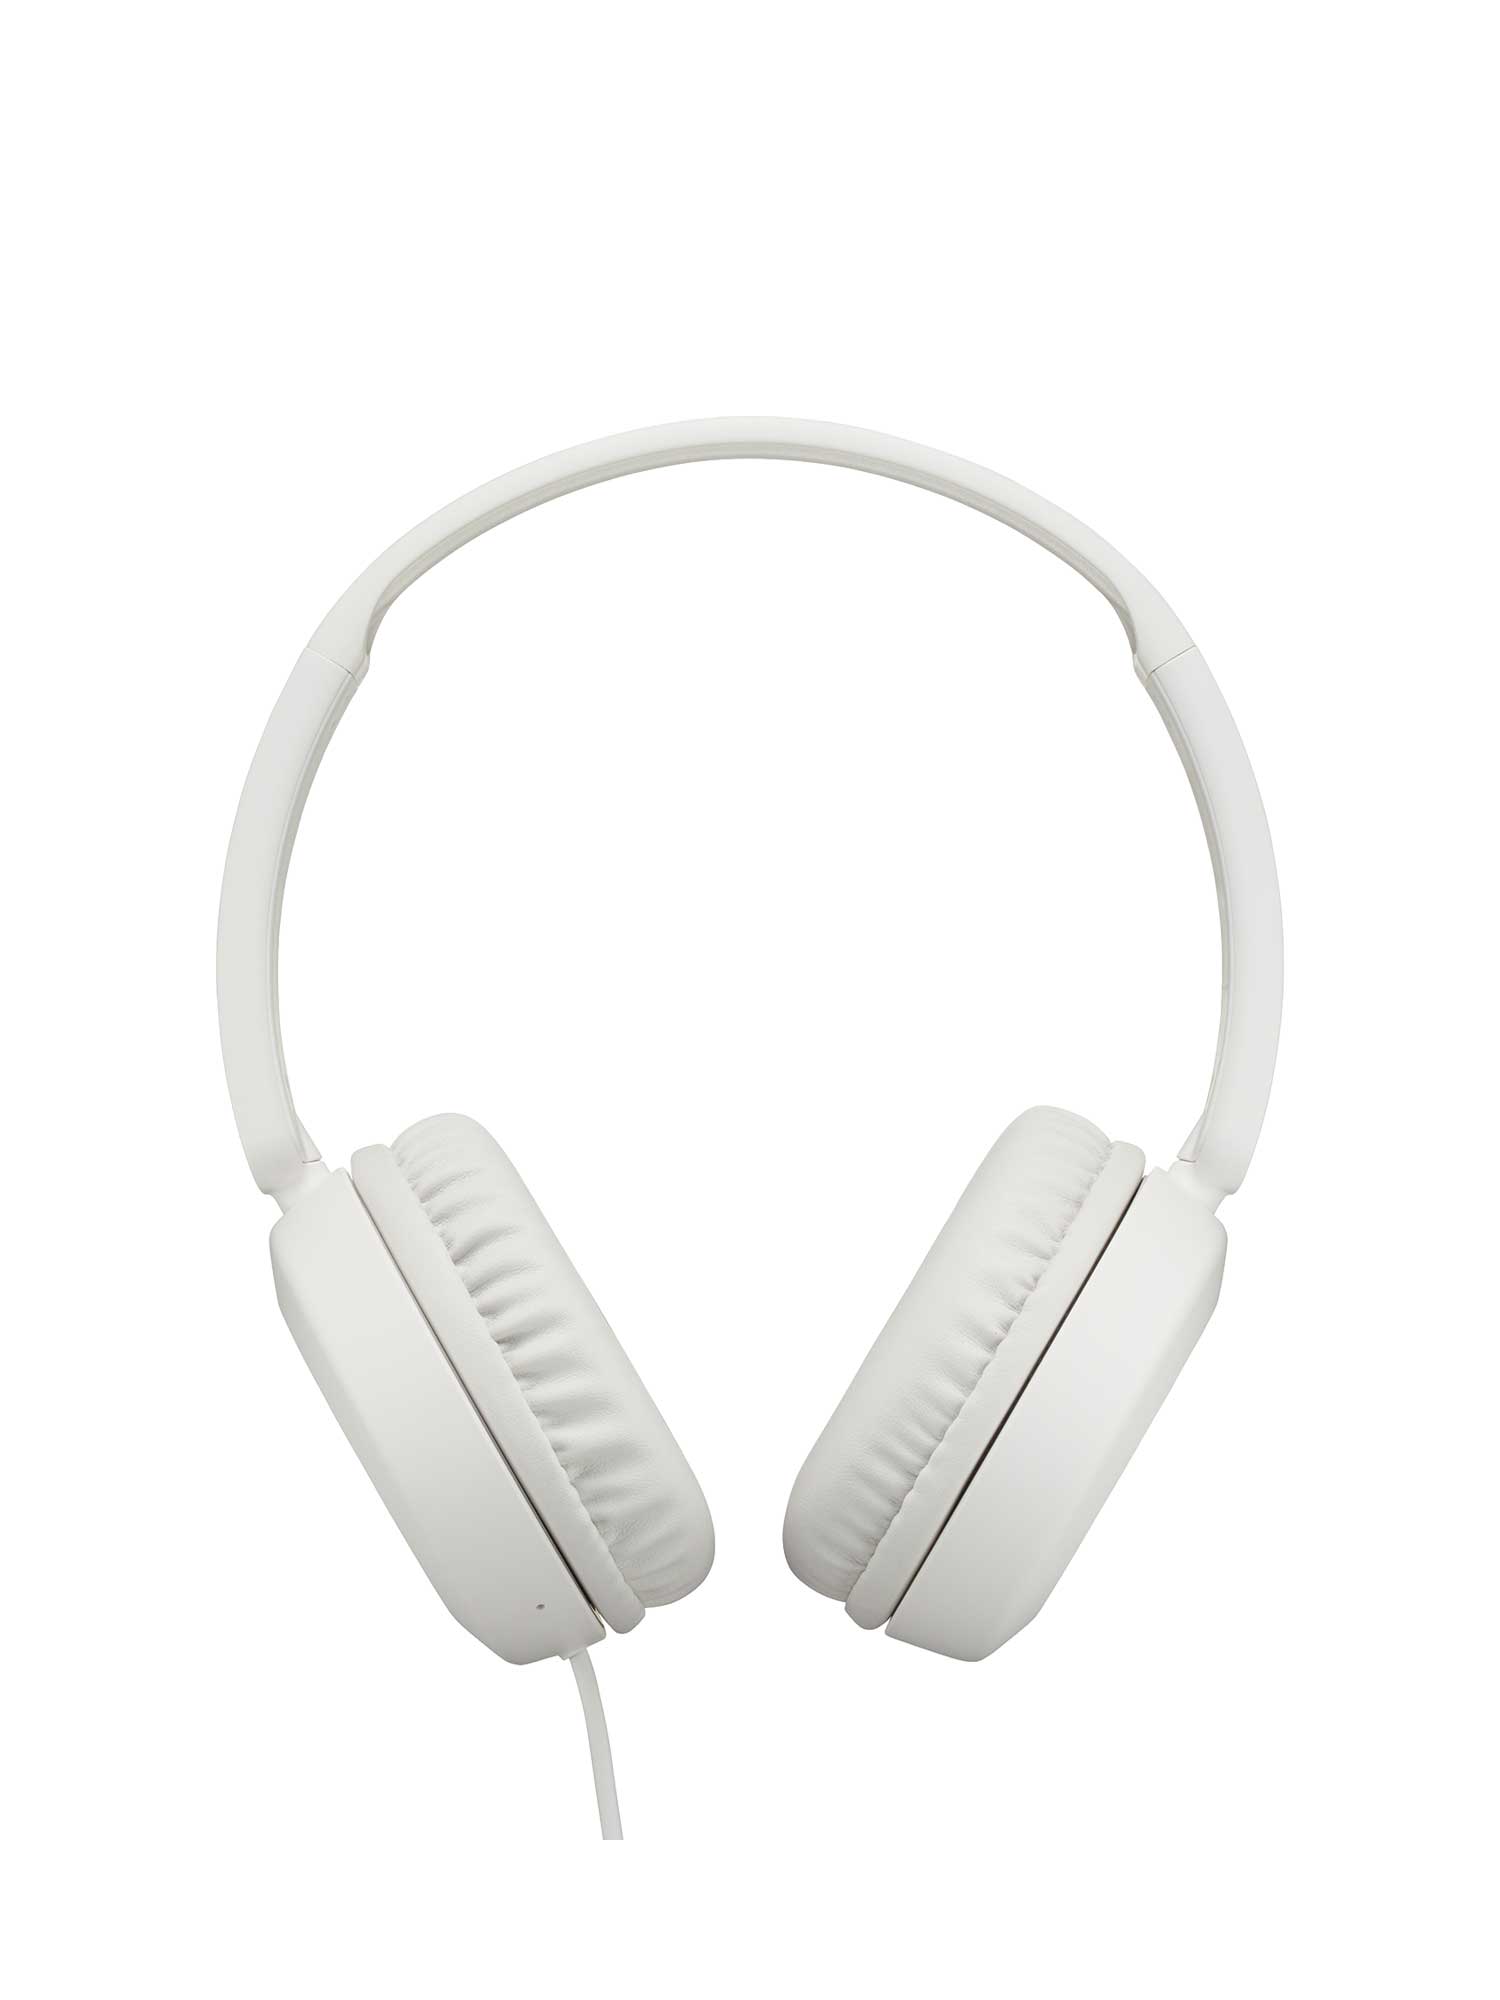 HA-S31M-W wired on-ear headphones comfortable earpads